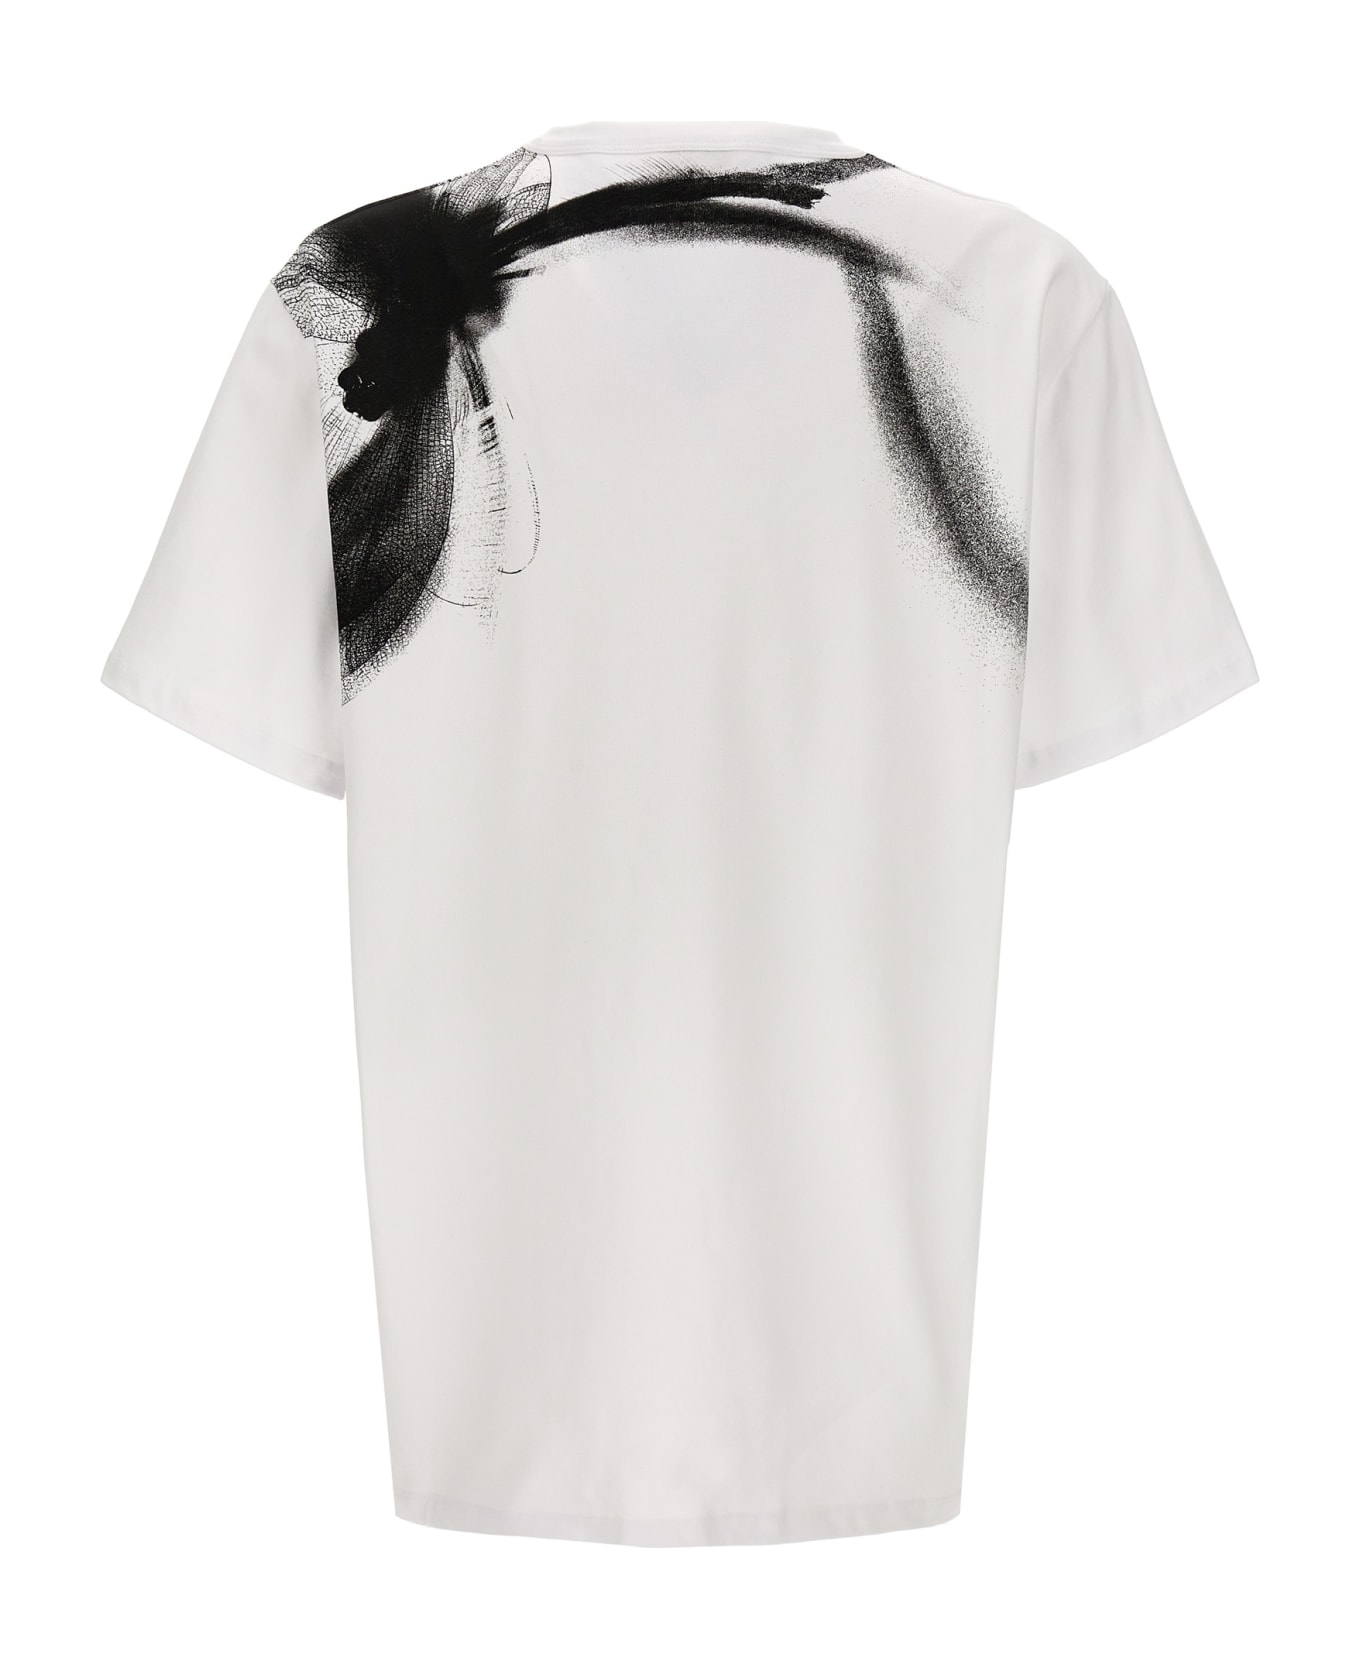 Alexander McQueen Contrast Print T-shirt - White/Black シャツ